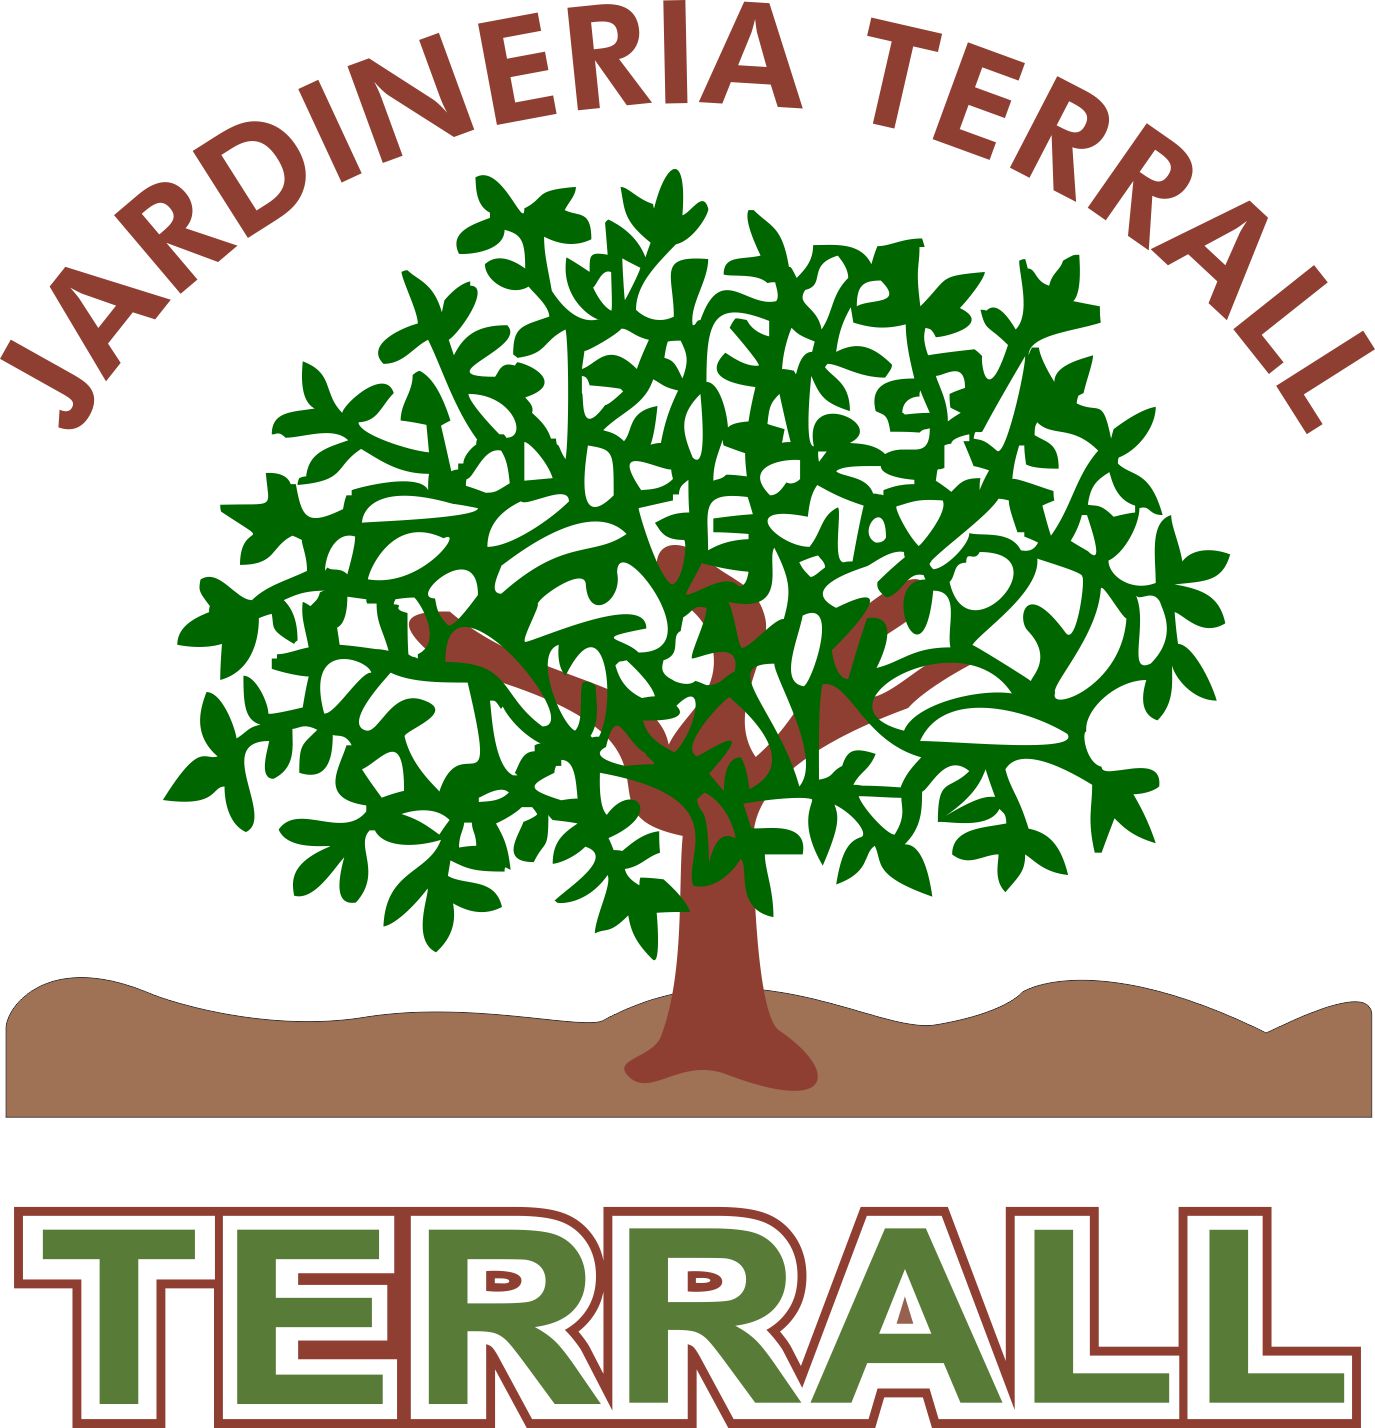 Centre Jardineria Terrall